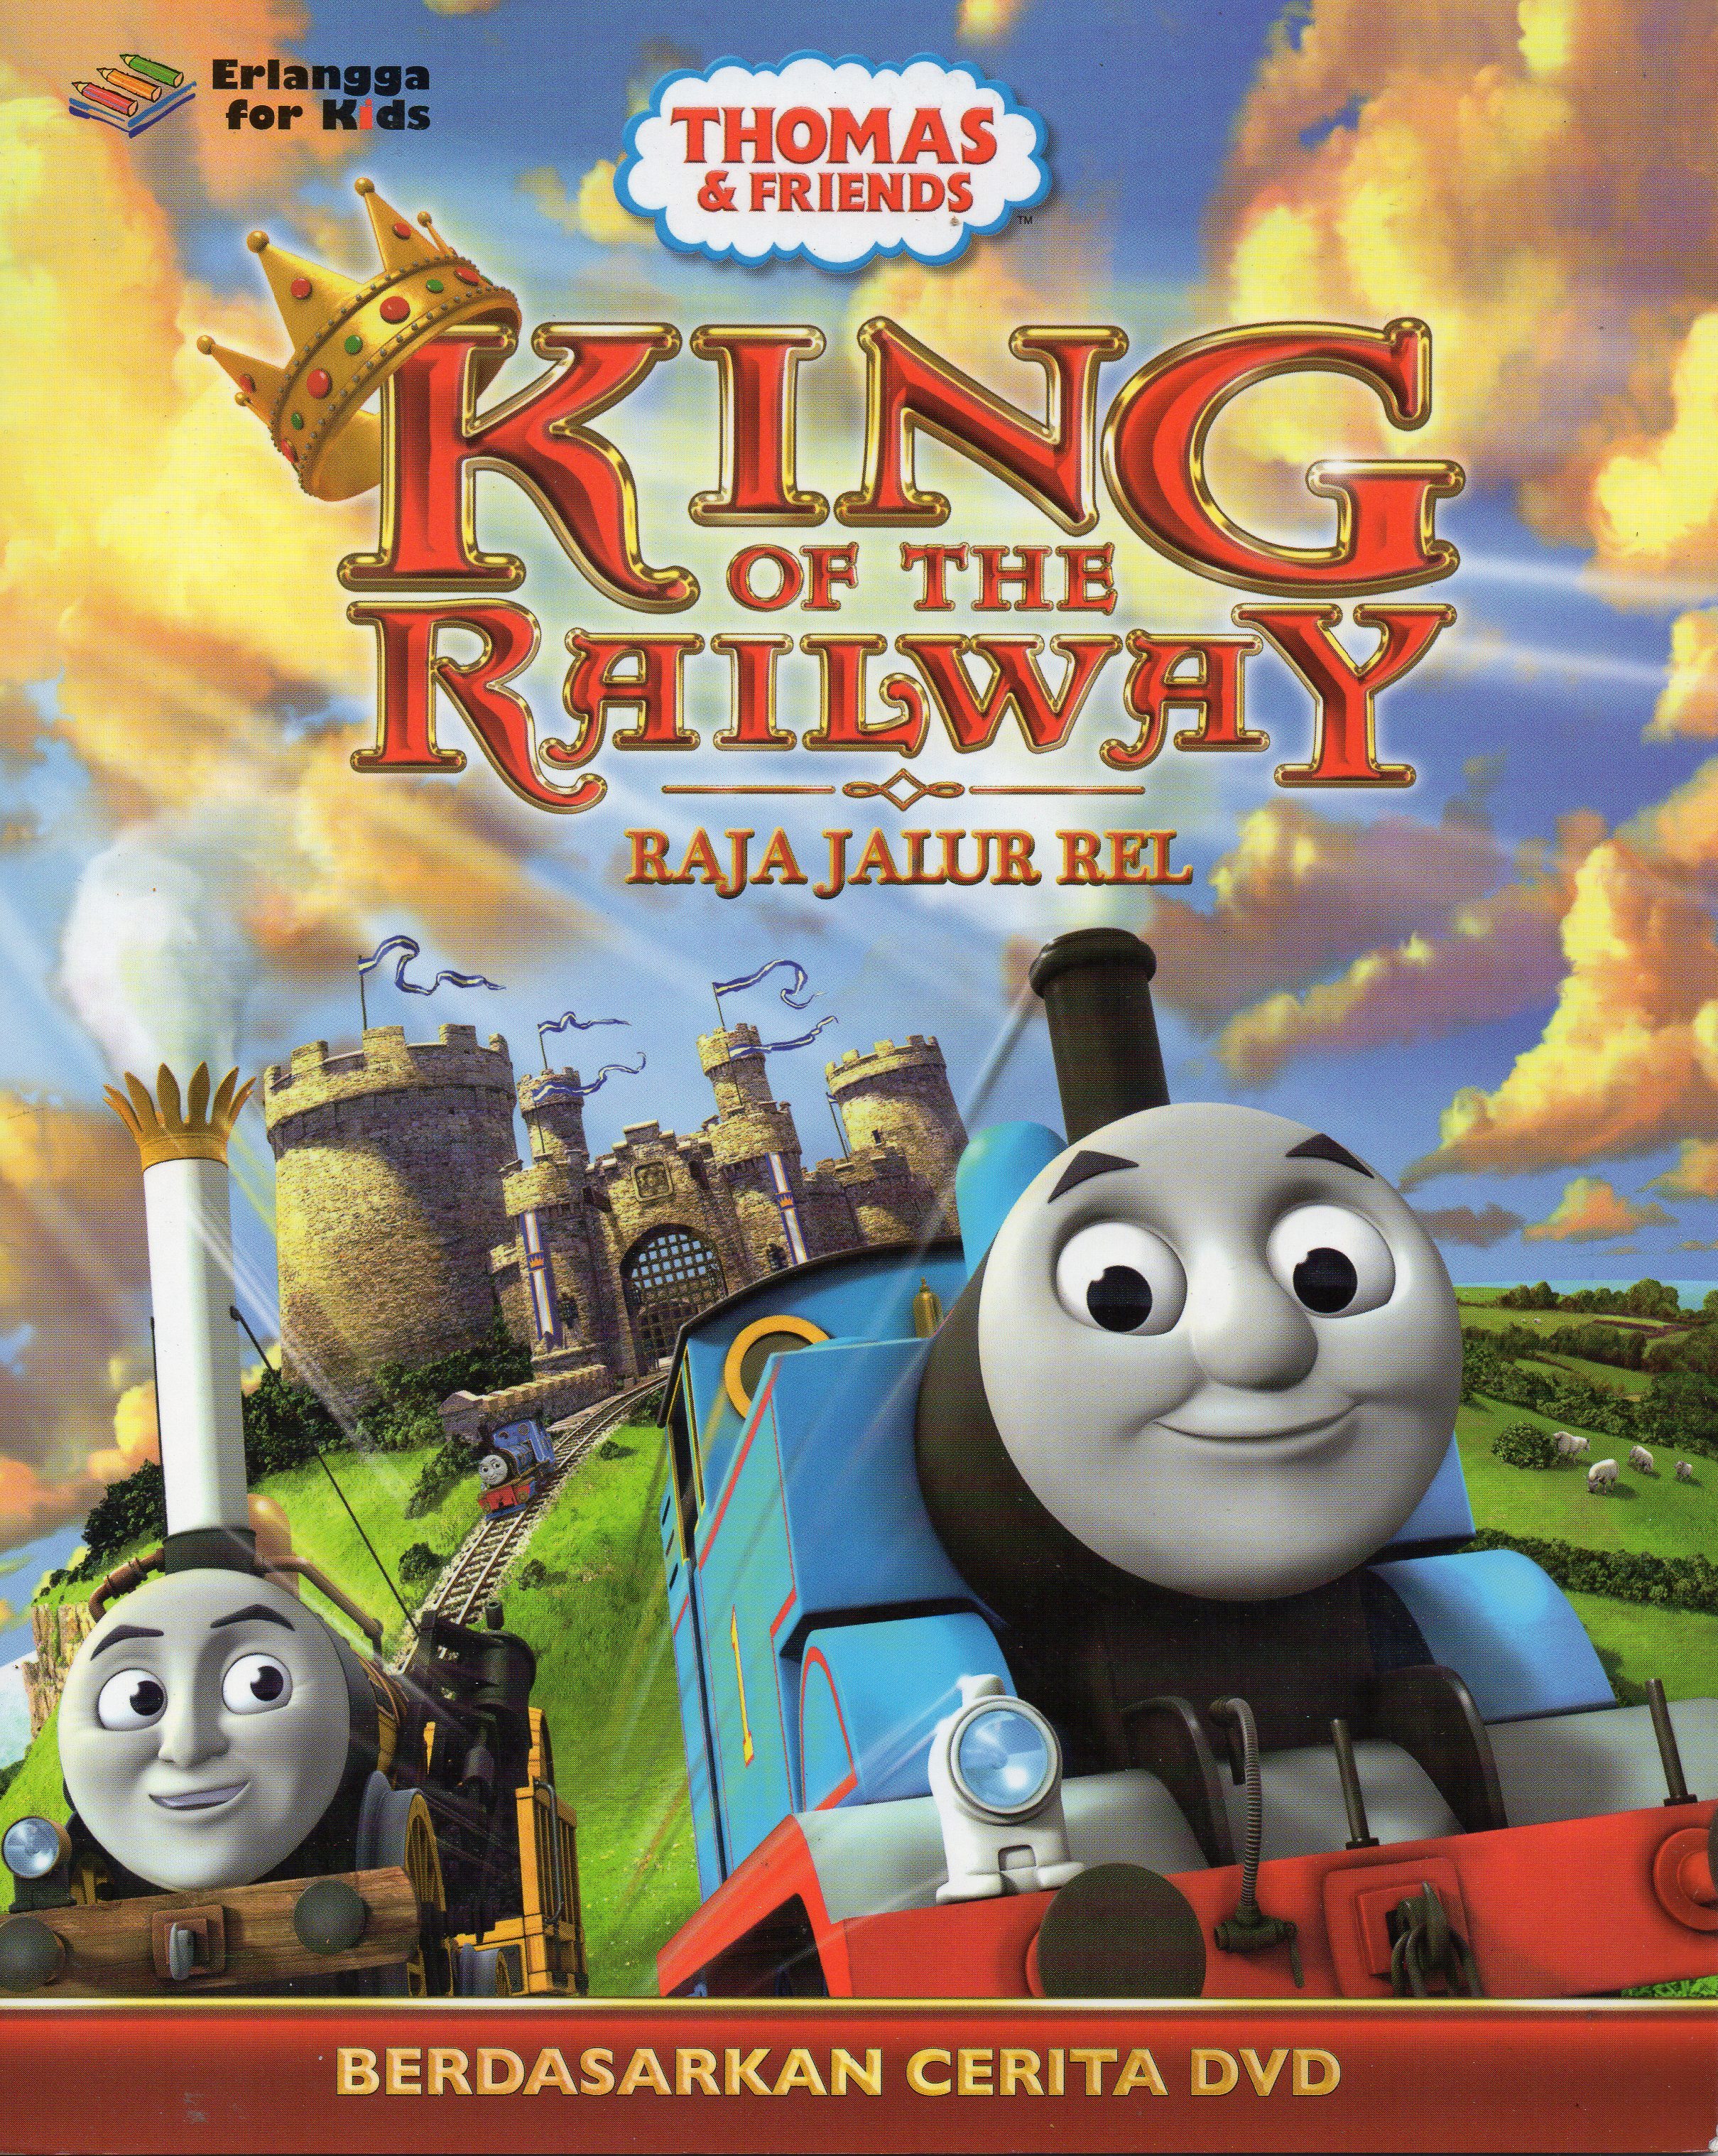 Thomas & friends king of the railway : raja jalur rel